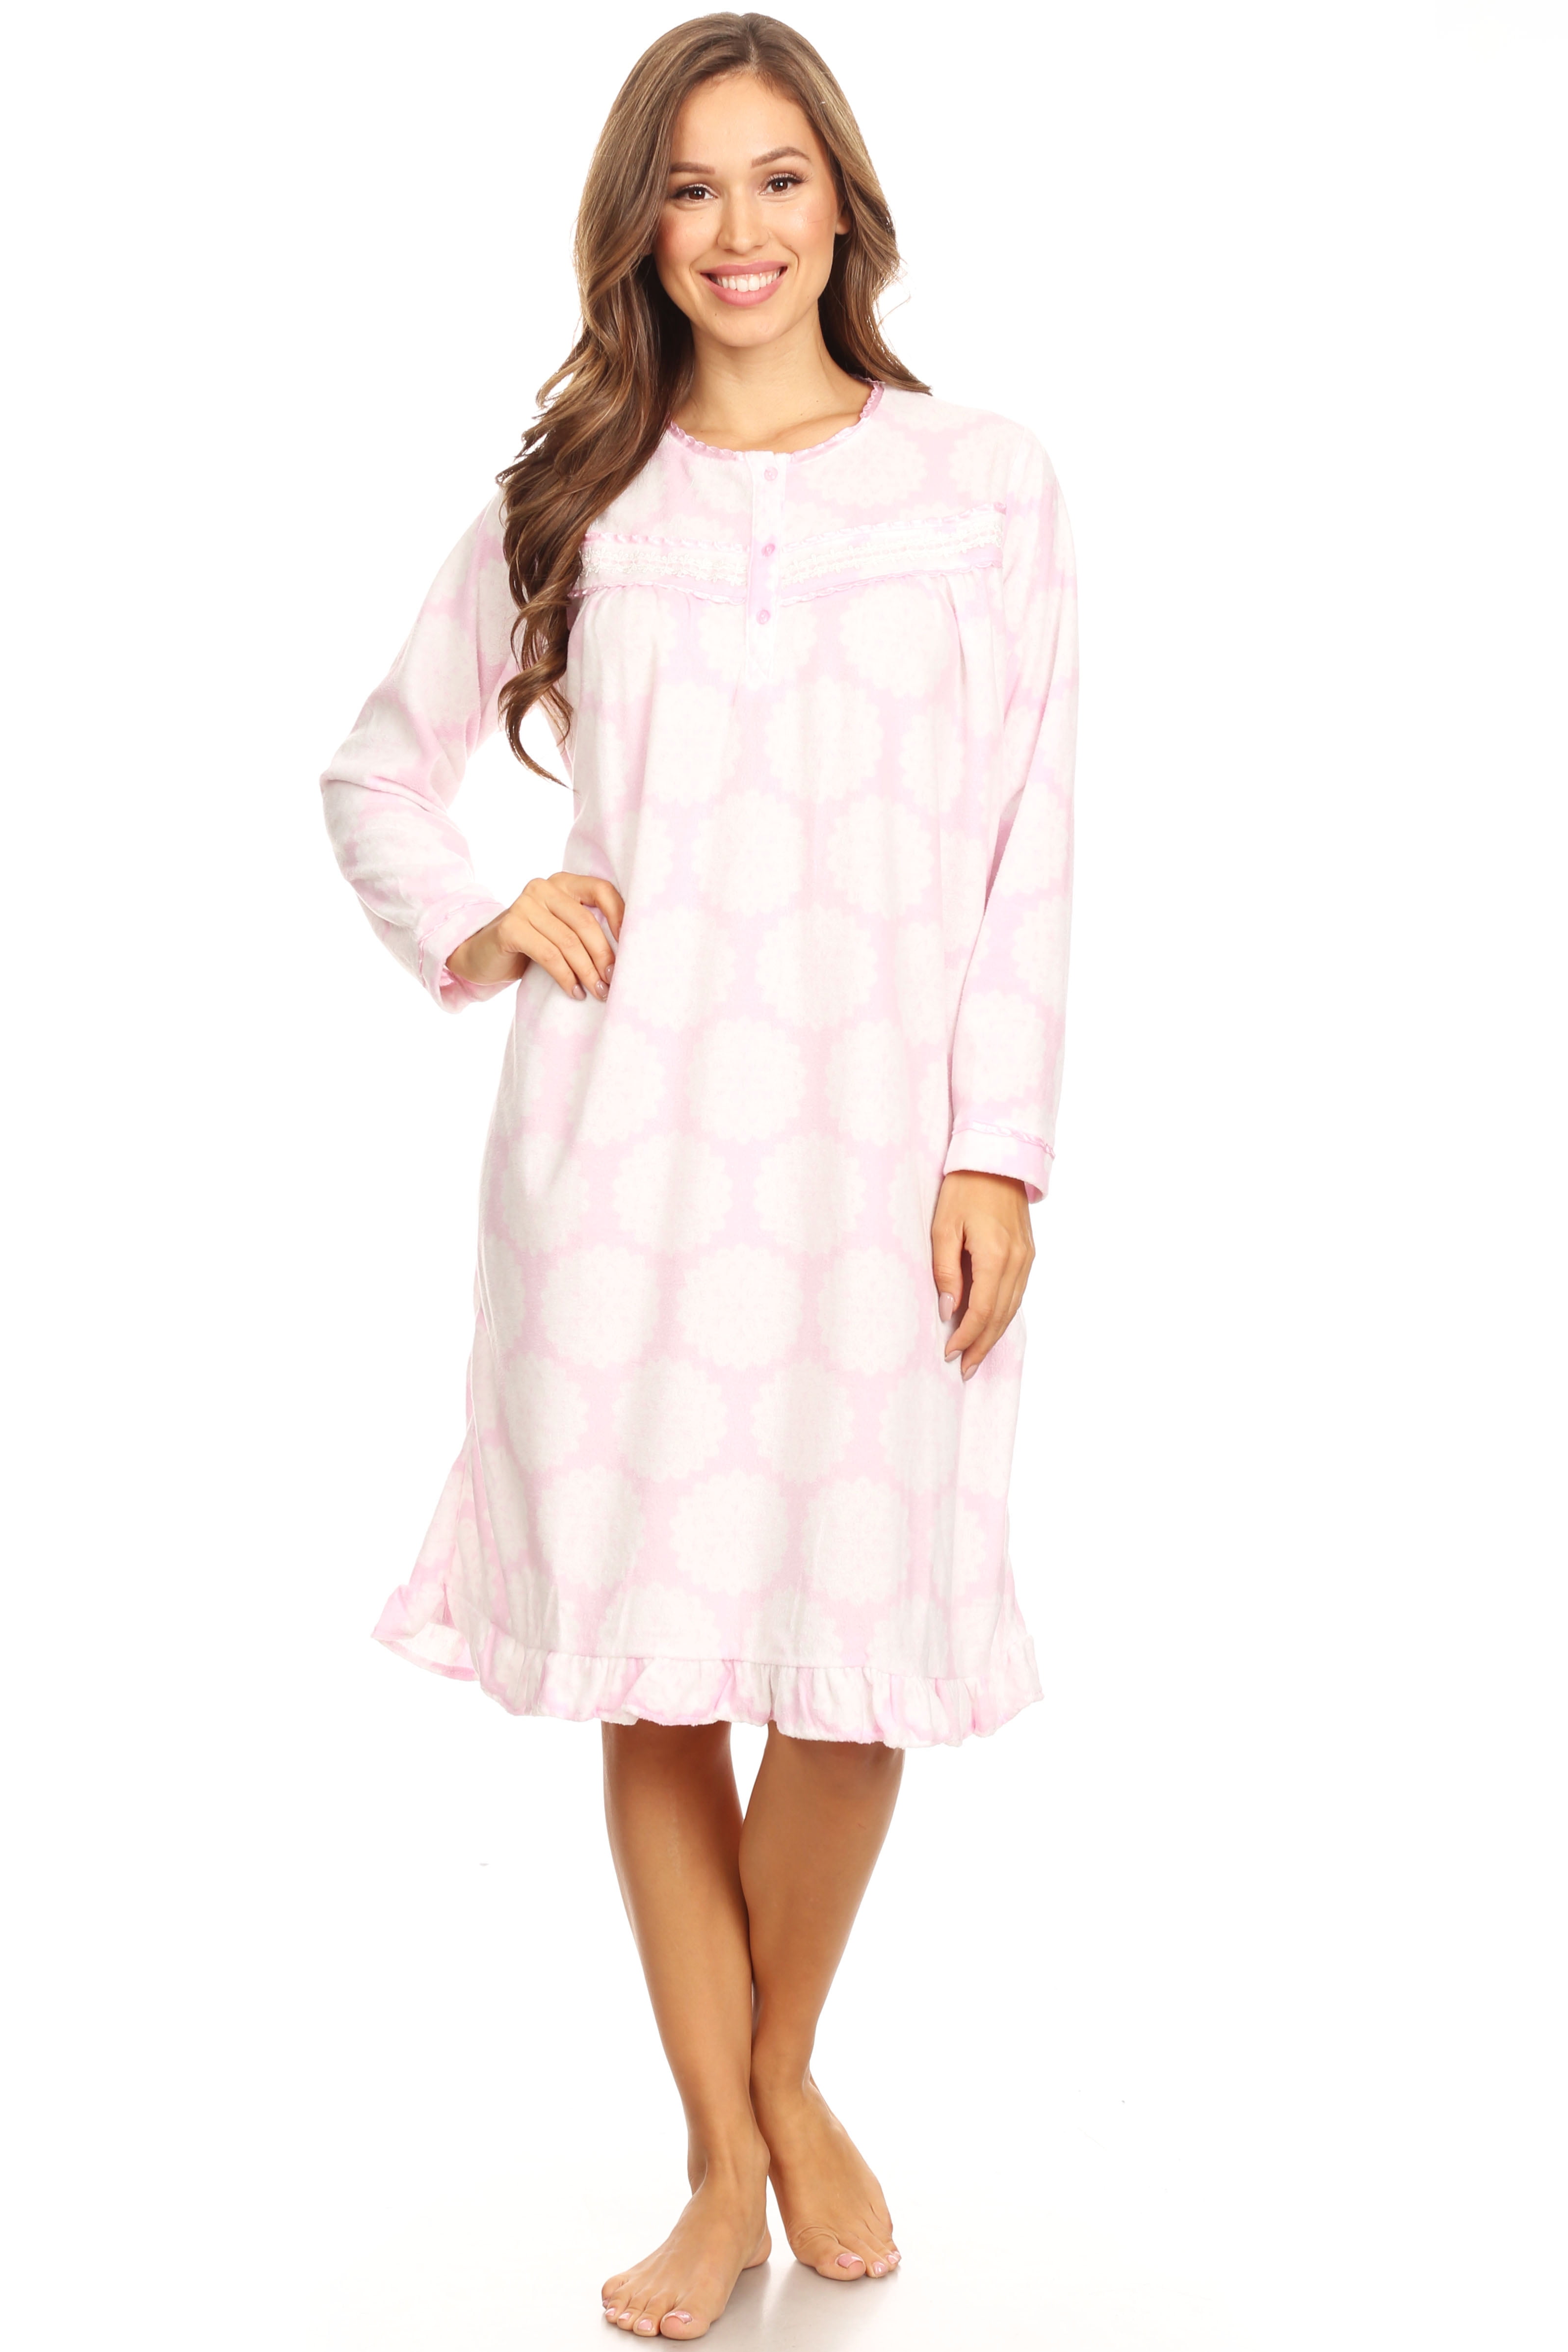 4029 Fleece Womens Nightgown Sleepwear Pajamas Woman Long Sleeve Sleep ...